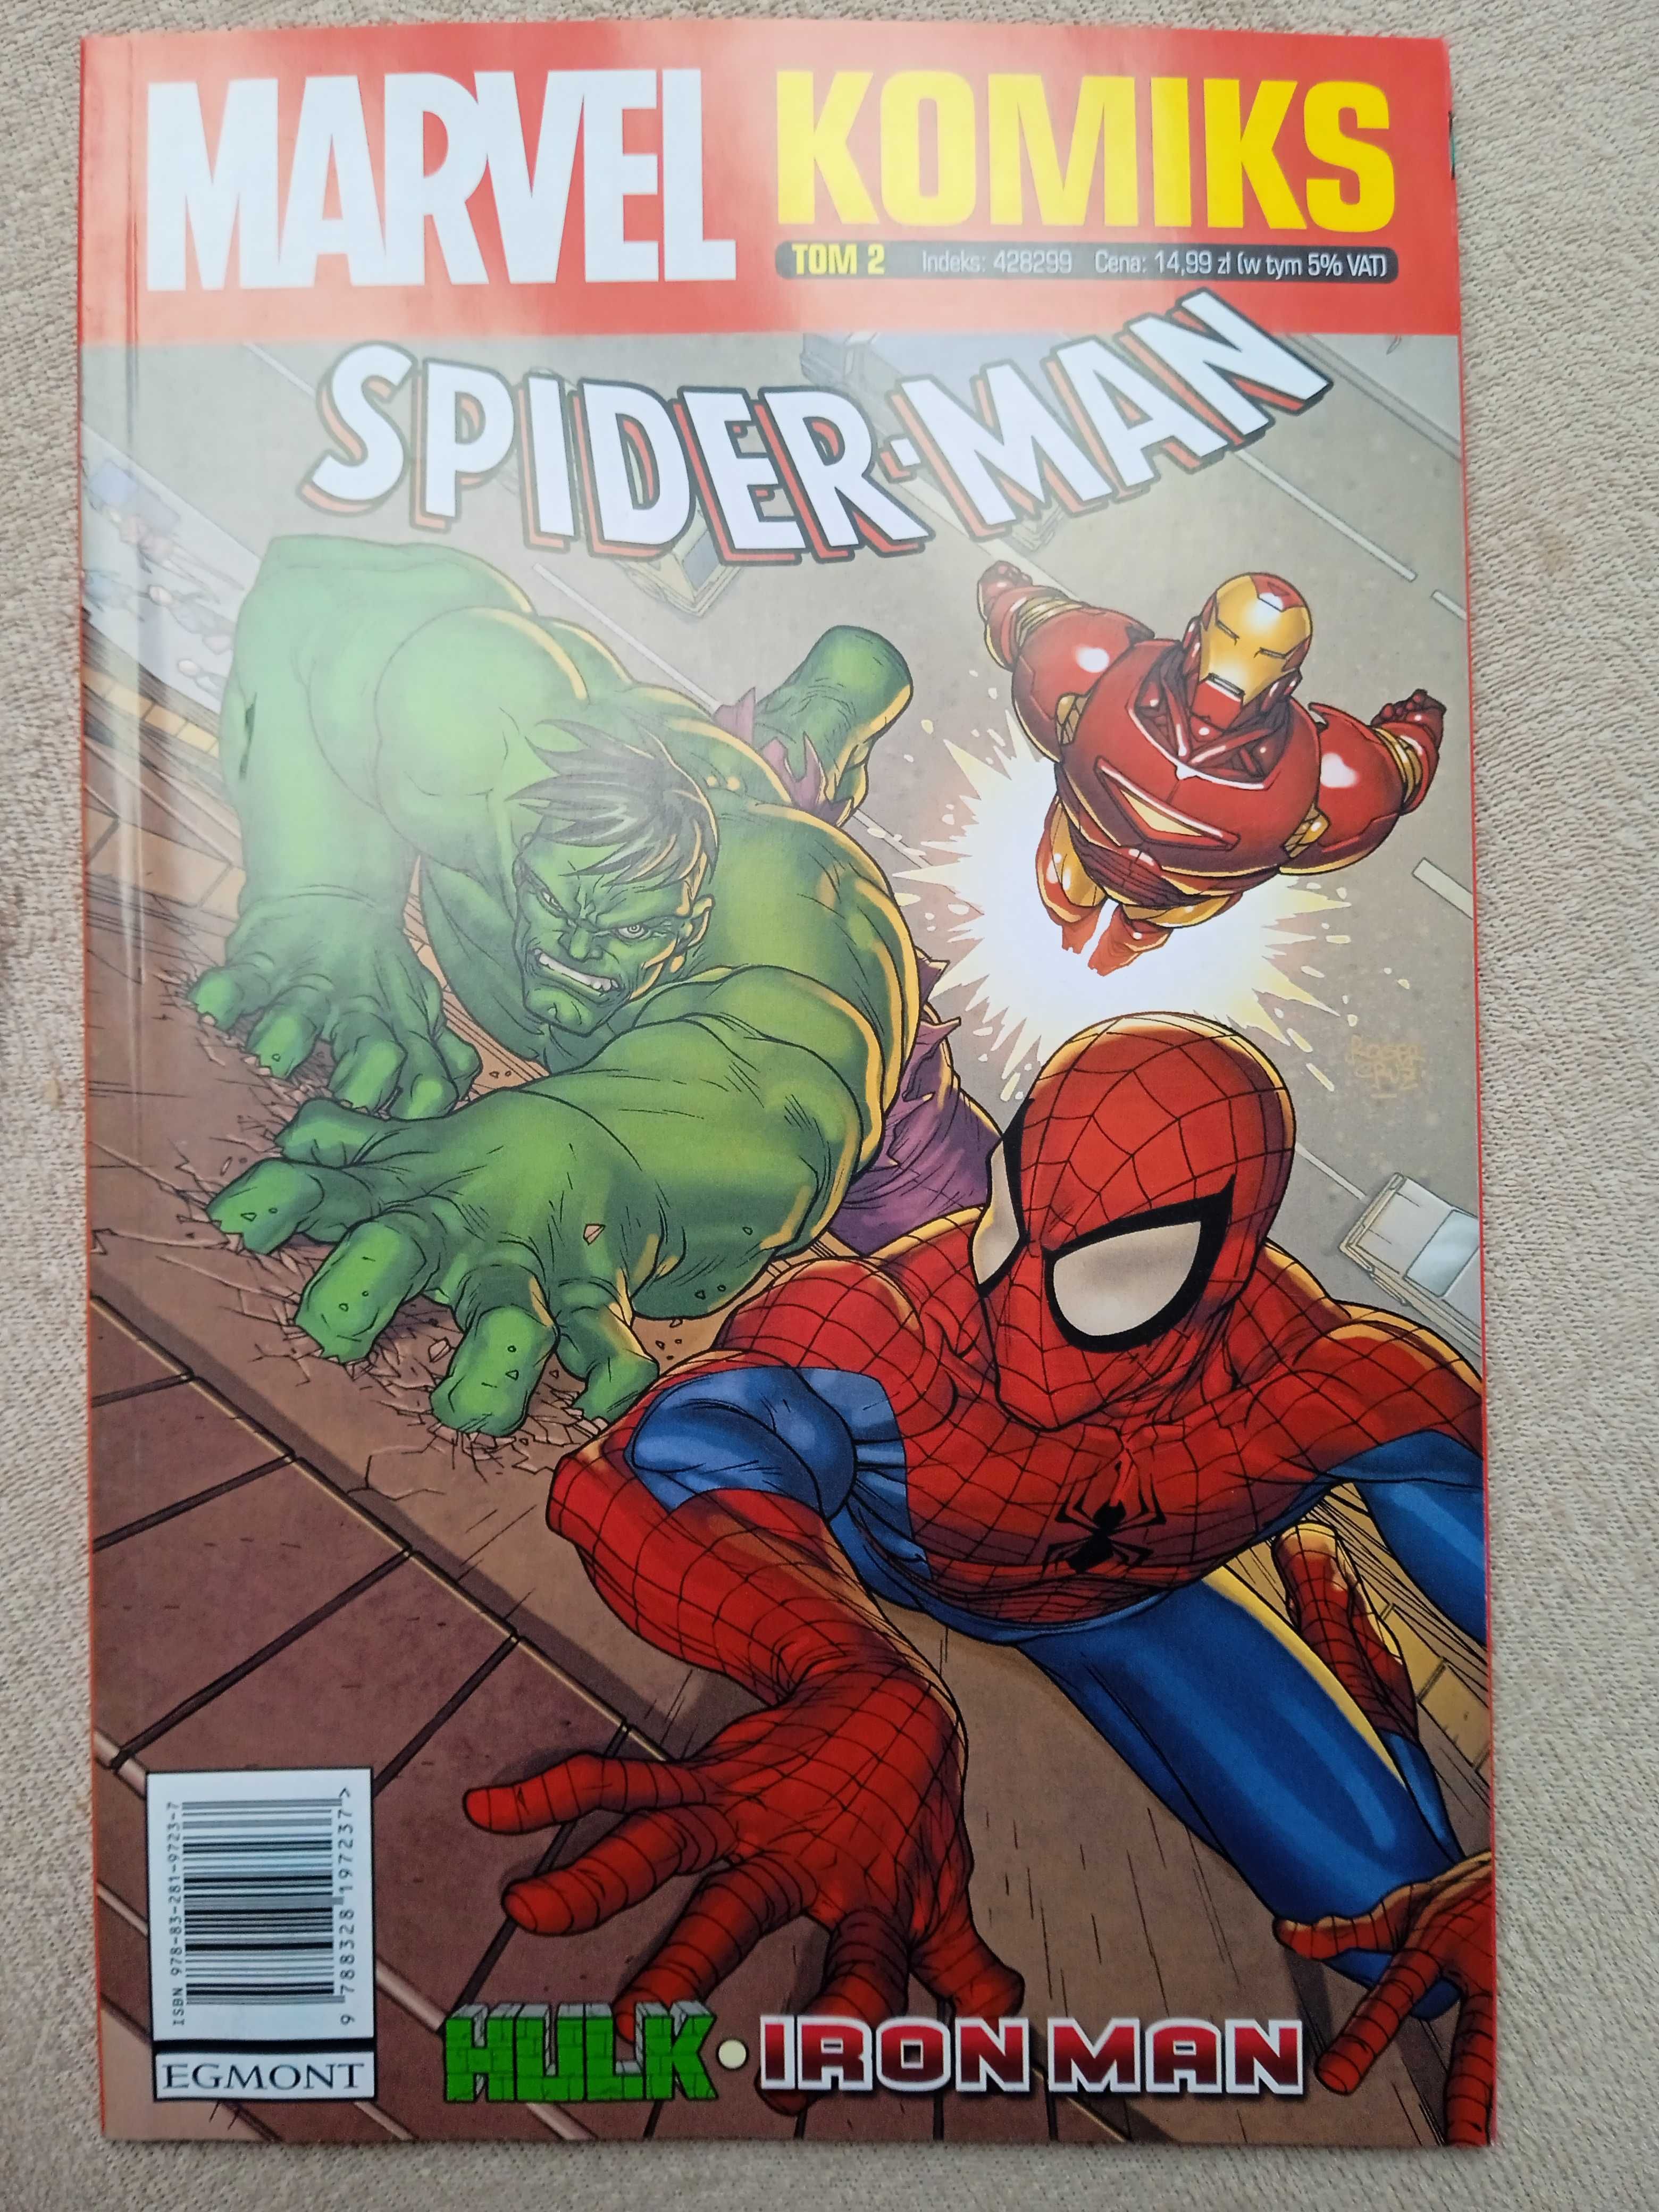 Marvel Komiks Tom 2 Spider-Man, Hulk, Iron Man